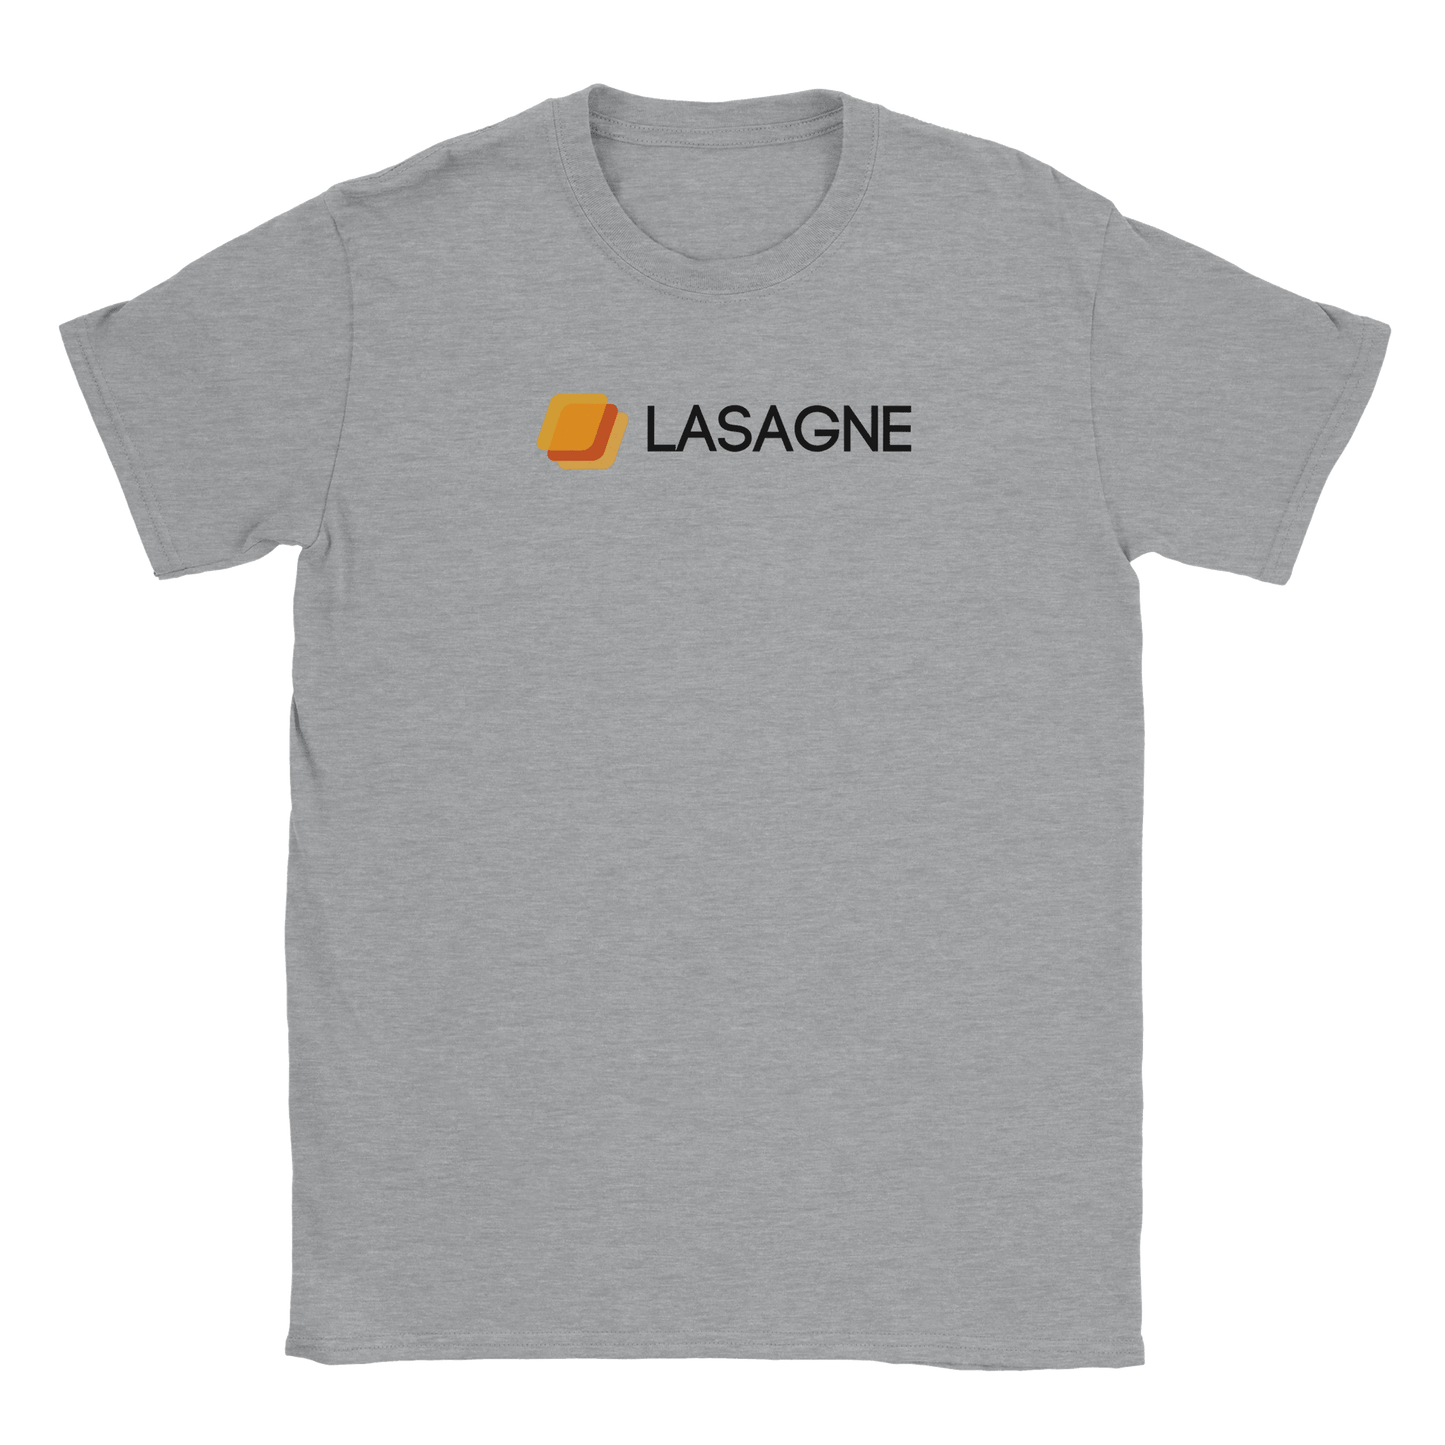 Lasagne - T-shirt Grå